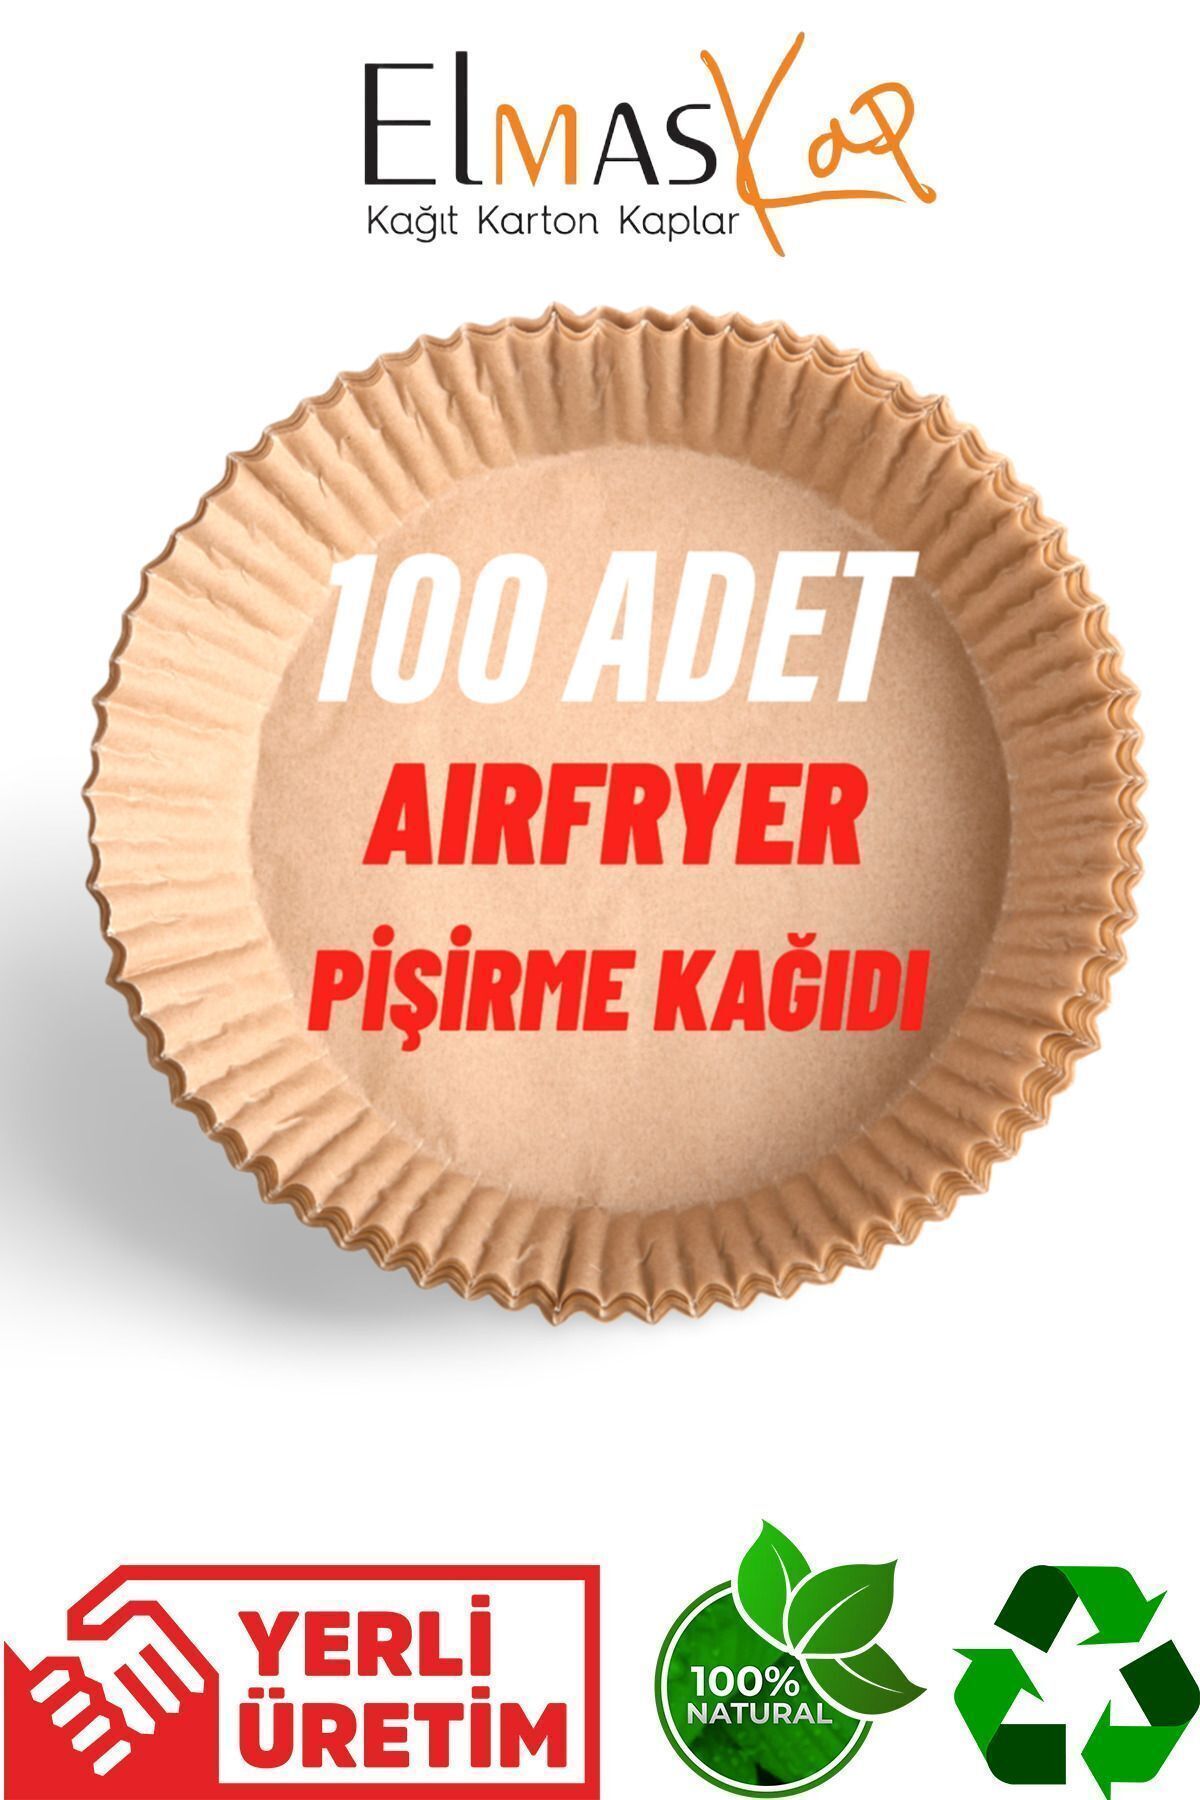 Elmas Kap Airfryer Pişirme Kağıdı 100 Adet Yuvarlak Yağsız Fritöz Philips Xiaomi Yağl Kağıt Airfreyer Airfry